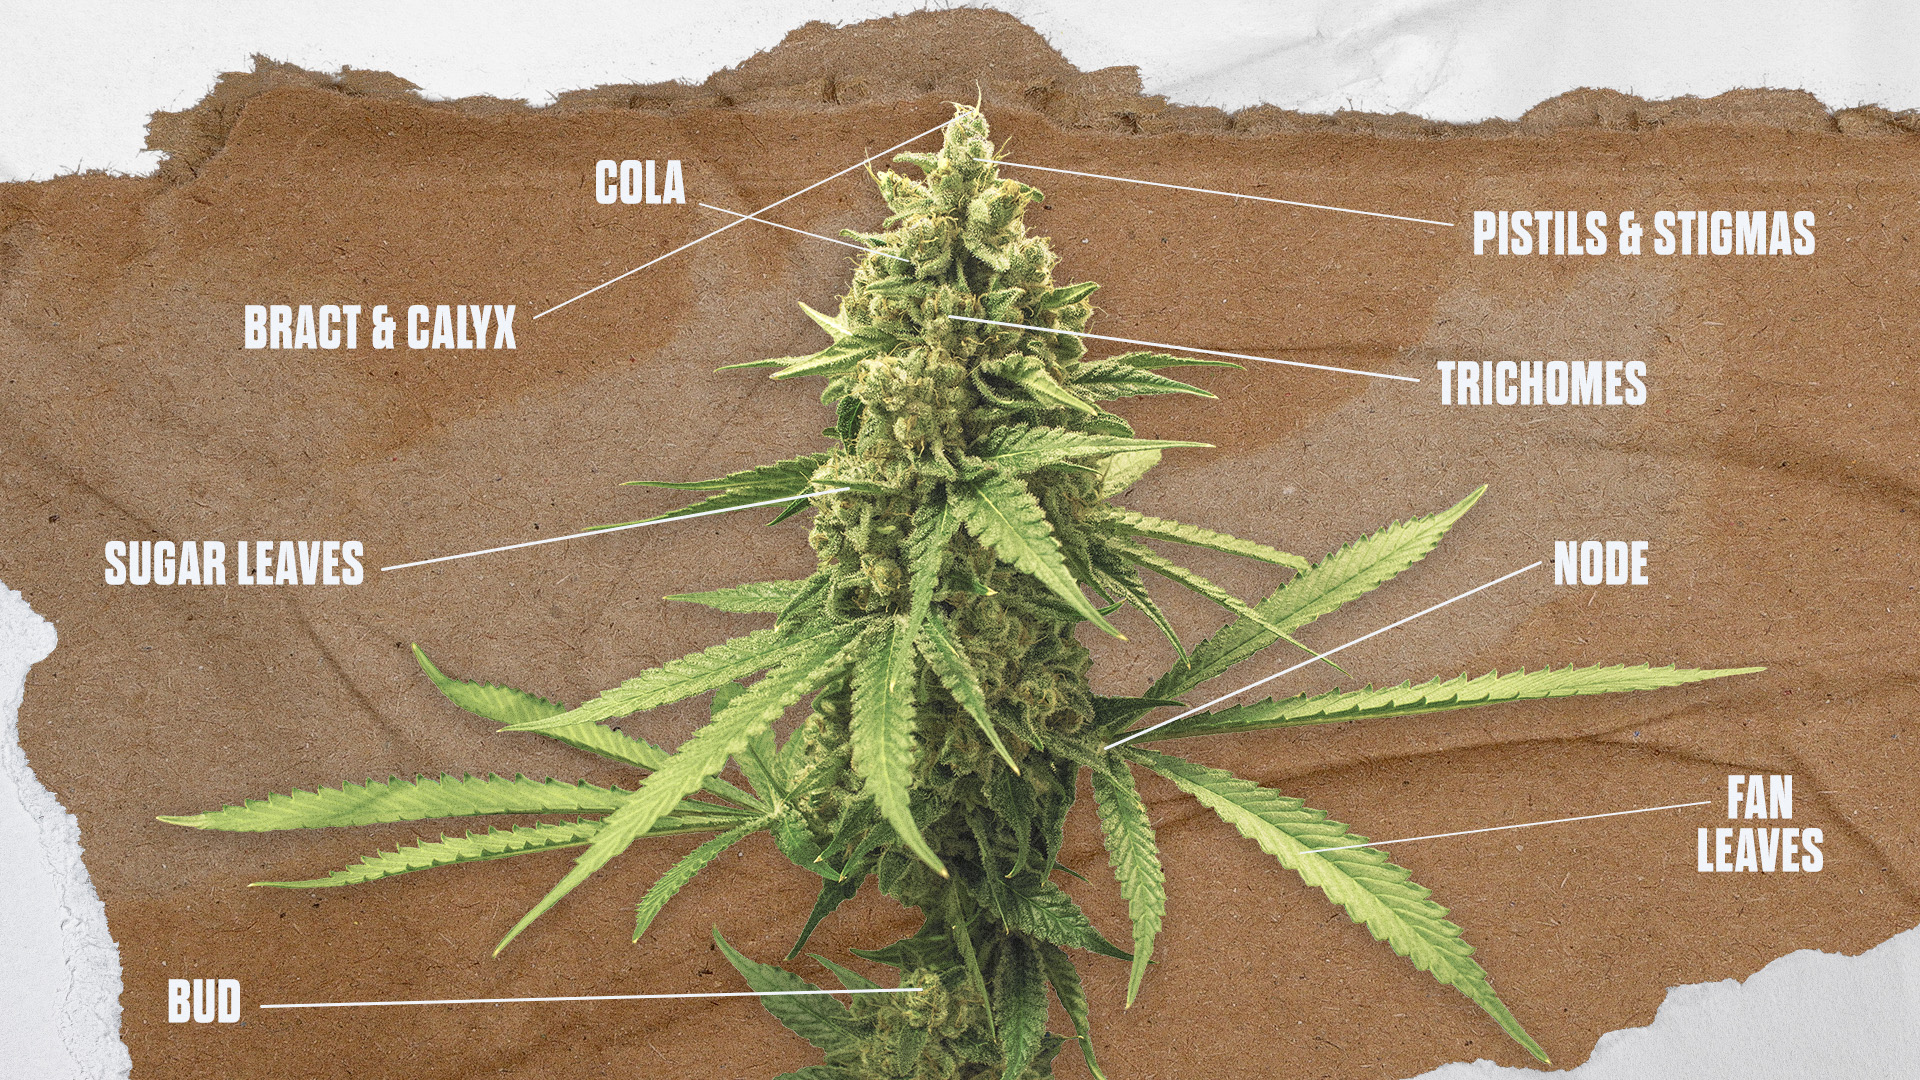 cannabis plant anatomy